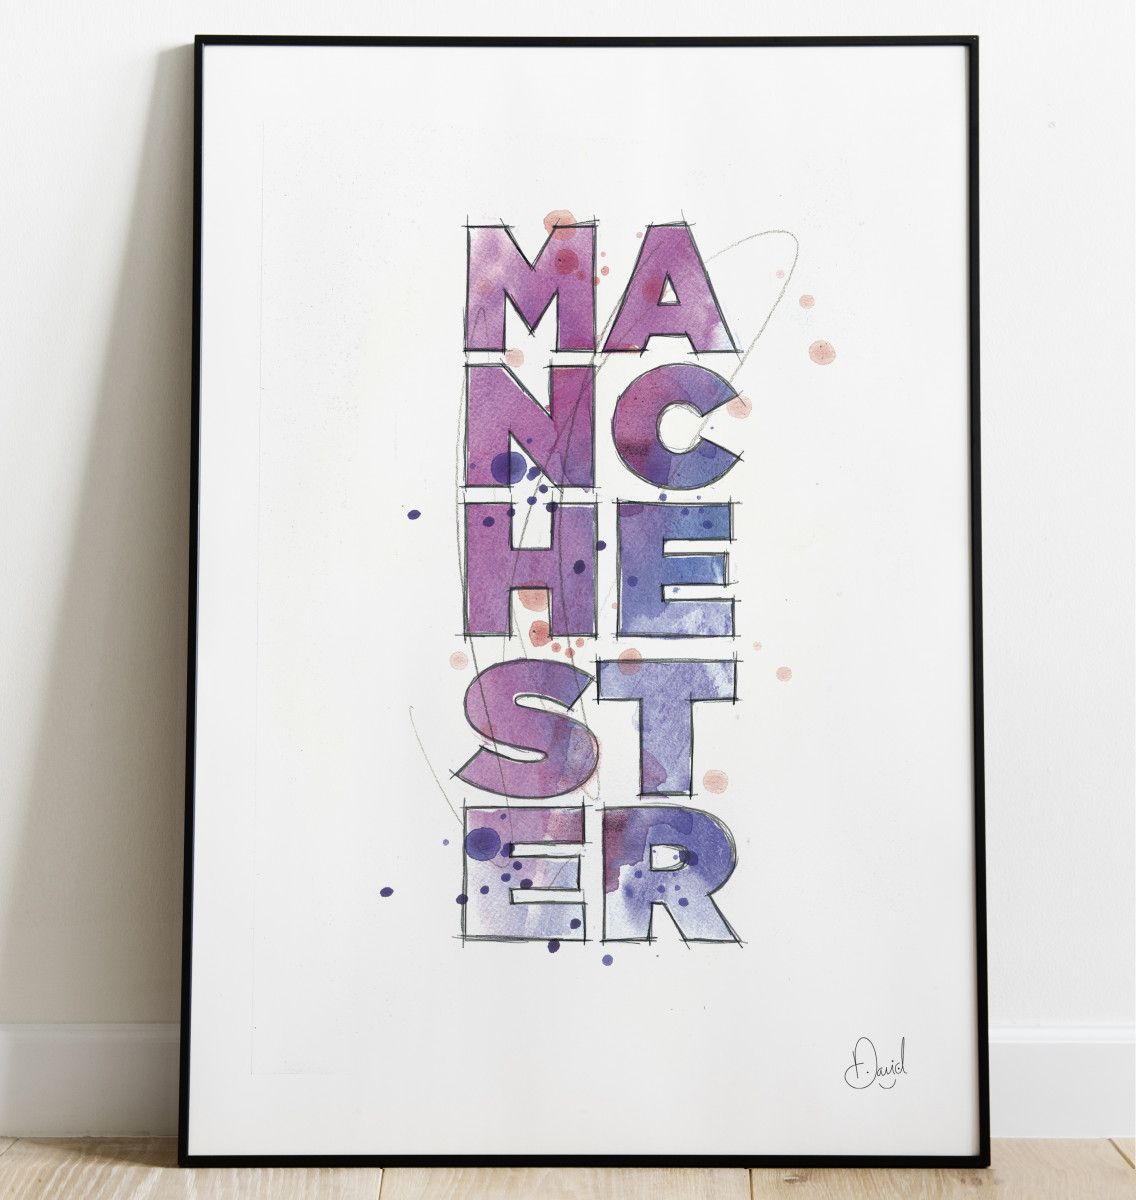 David Marston Art - Manchester Such A Beautiful Word